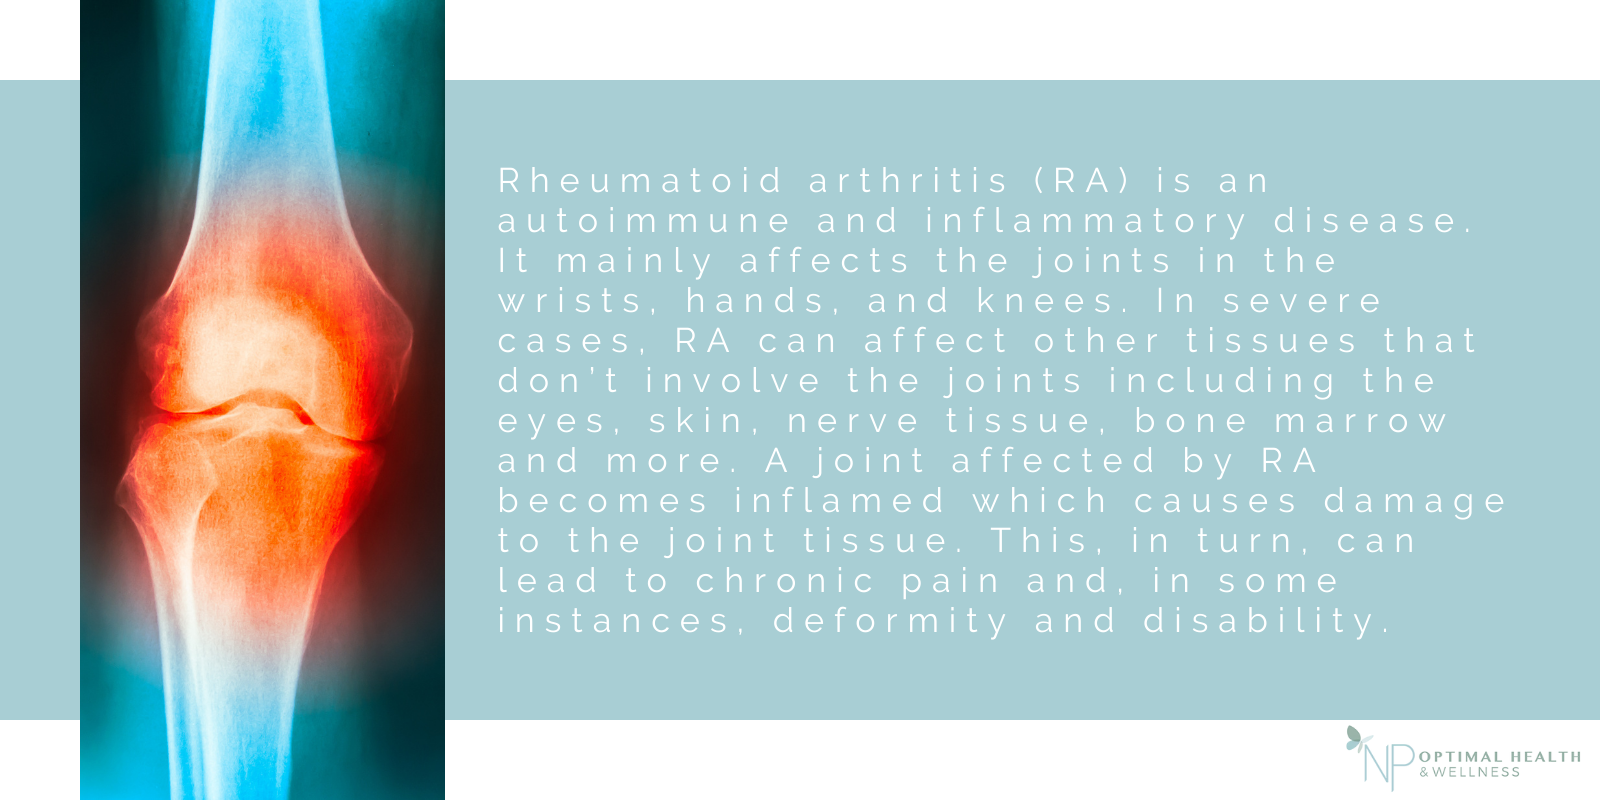 Rheumatoid arthritis is an auto-immune and inflammatory disease. 